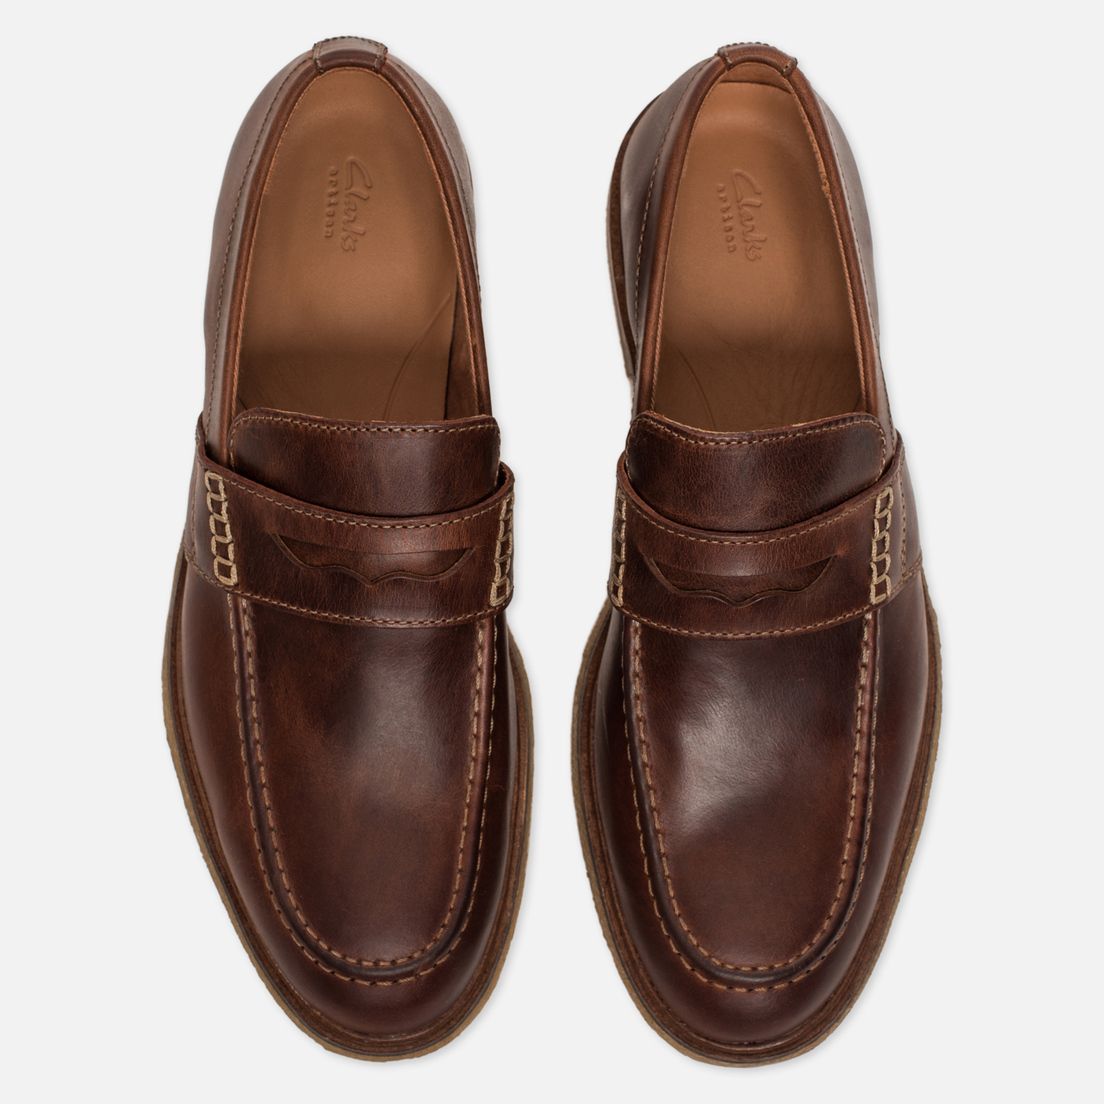 Clarks Originals Мужские ботинки лоферы Clarkdale Flow Leather